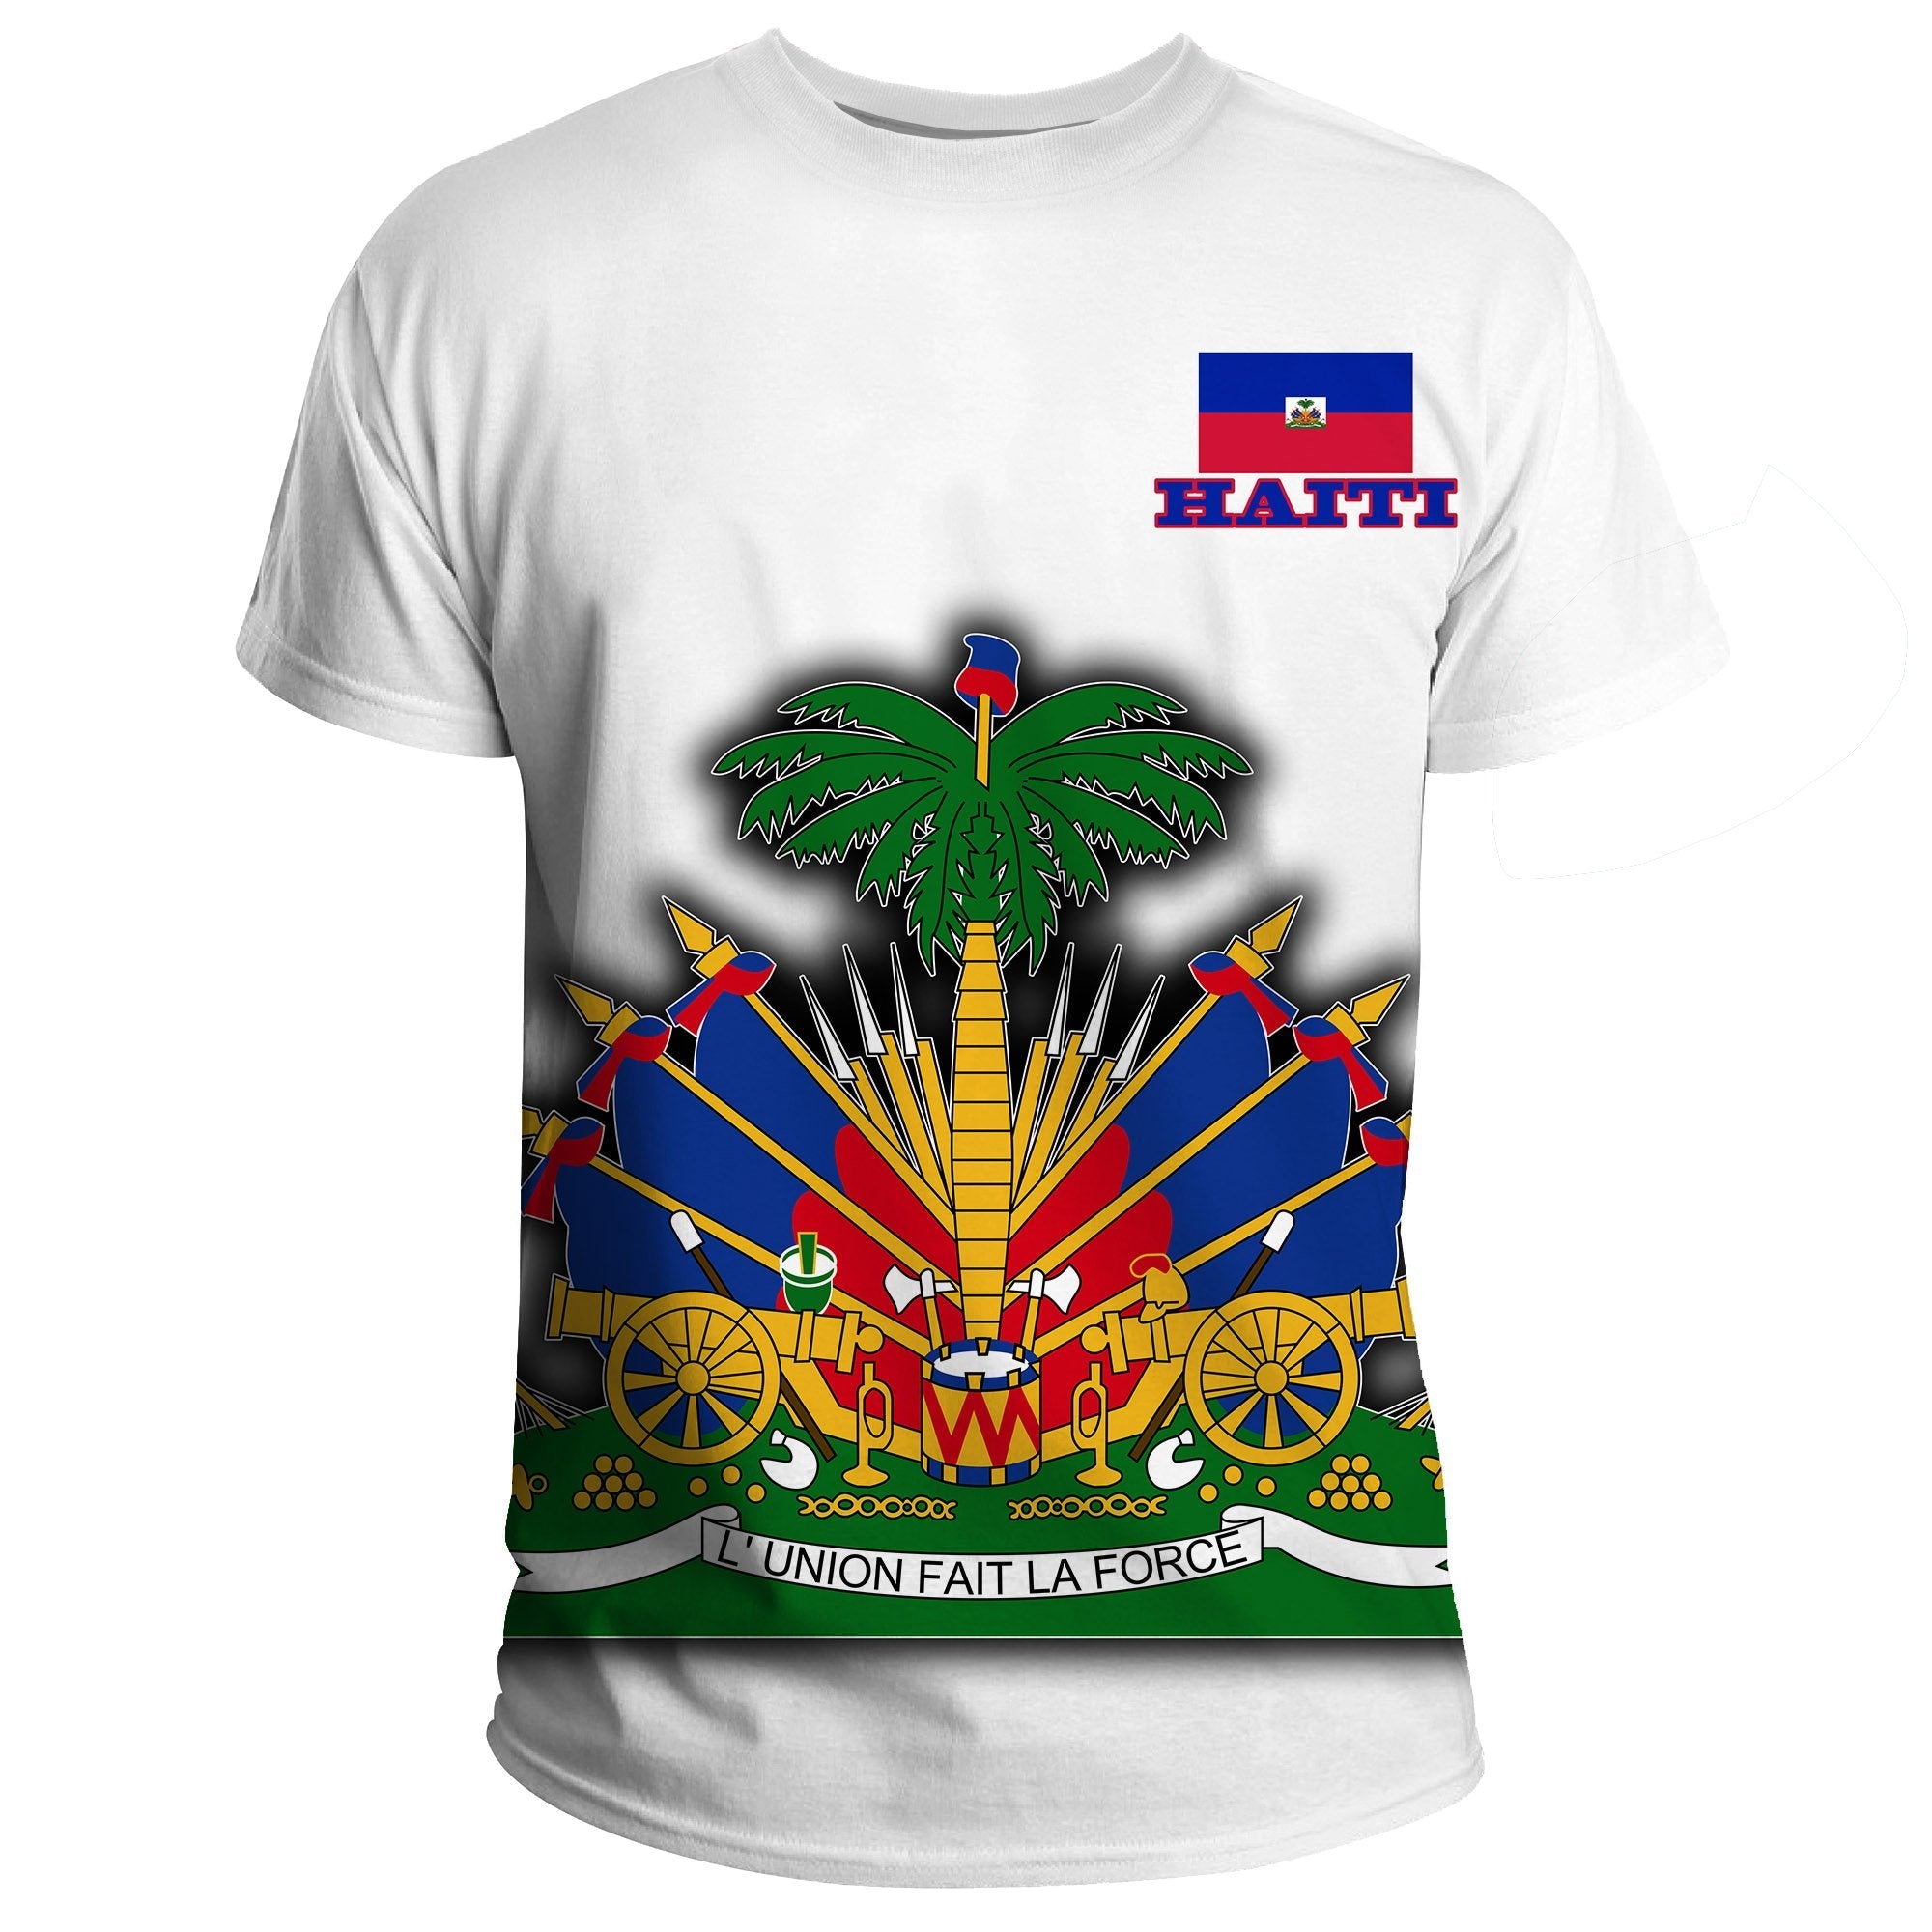 haiti-t-shirt-flag-with-coat-of-arm-white